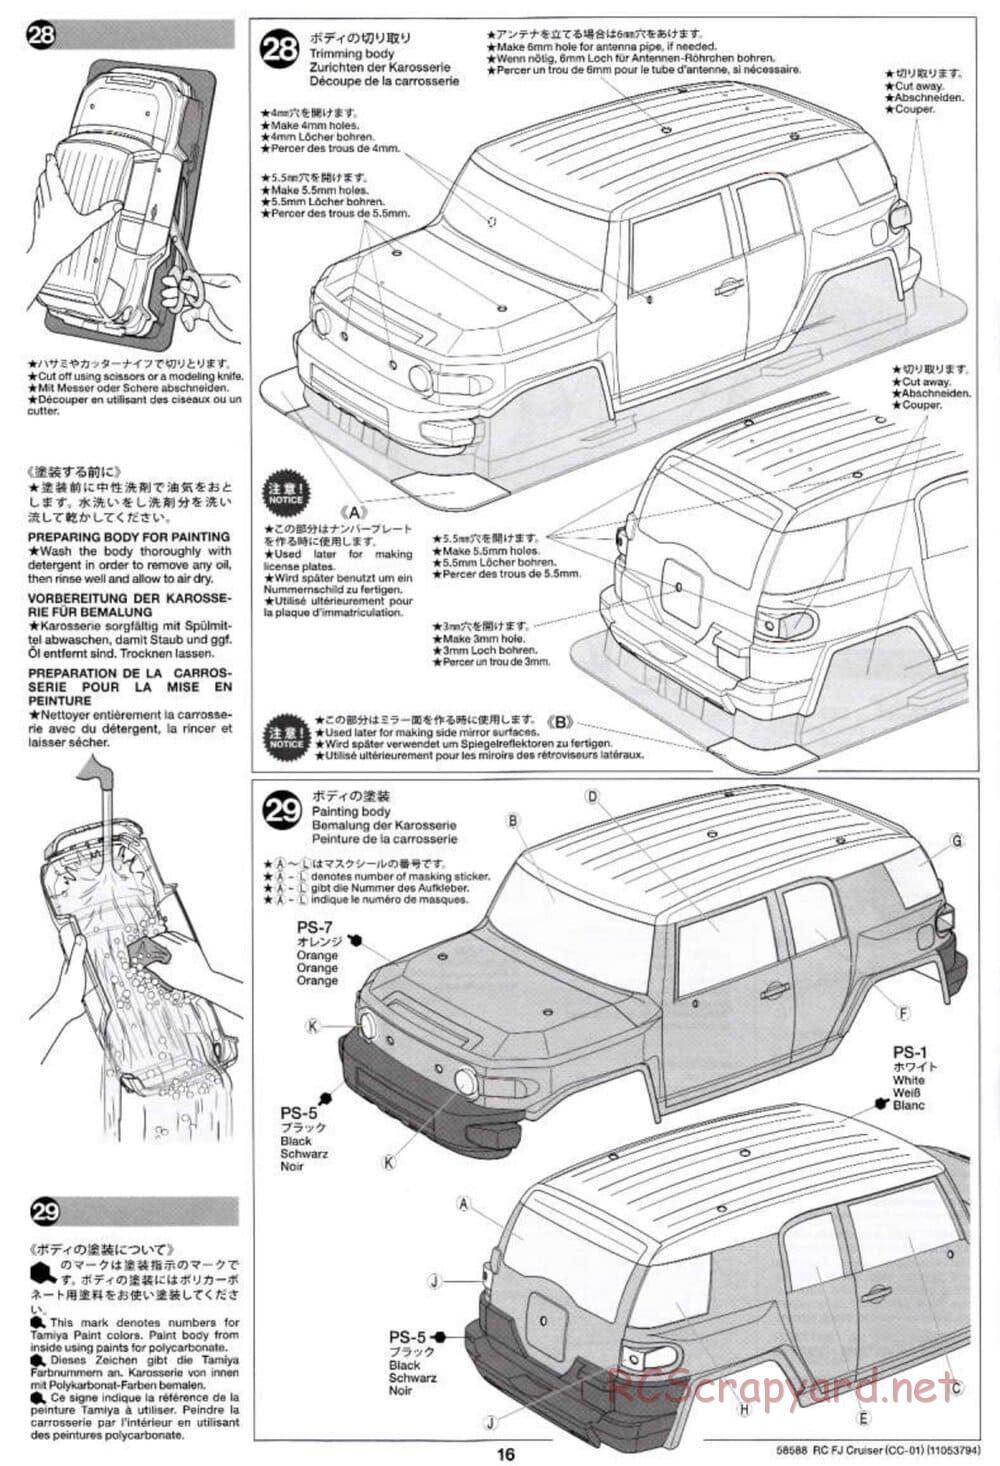 Tamiya - Toyota FJ Cruiser - CC-01 Chassis - Manual - Page 16